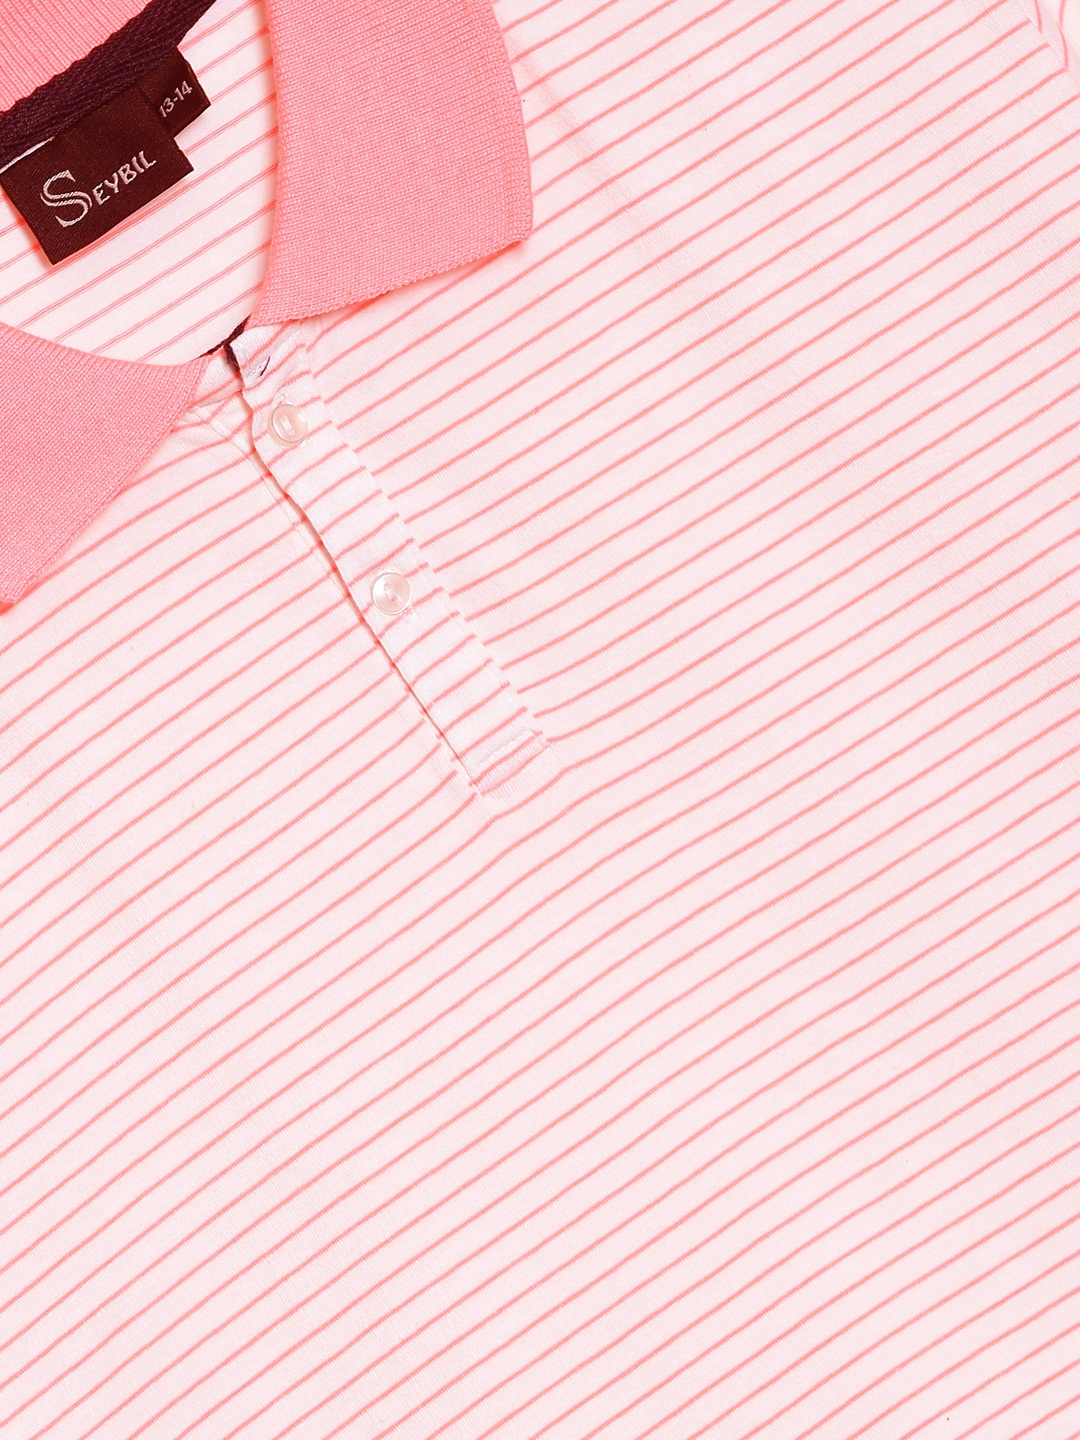 SEYBIL | Seybil Teen girls White cotton striped polo Tshirt 1